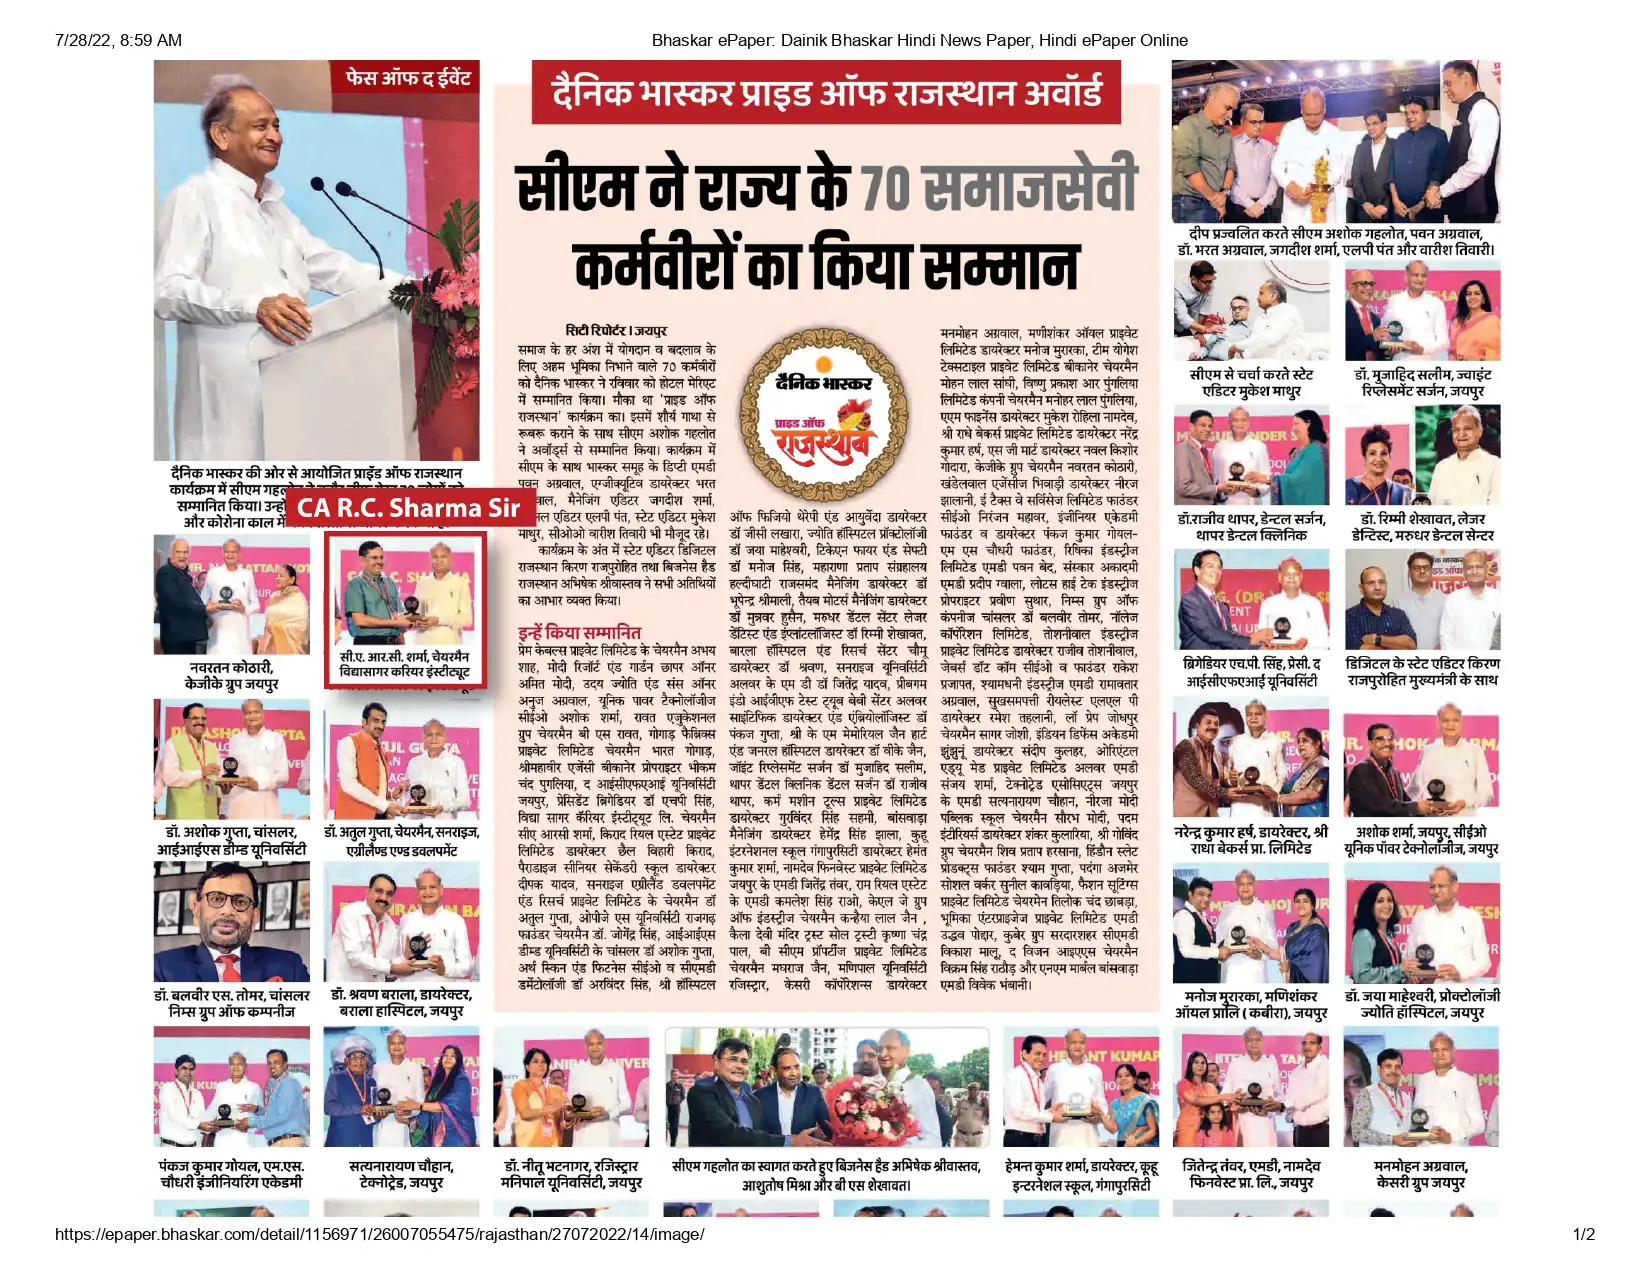 CA RC Sharma Sir Felicitated By Shri Ashok Gehlot, Chief Minister of Rajasthan